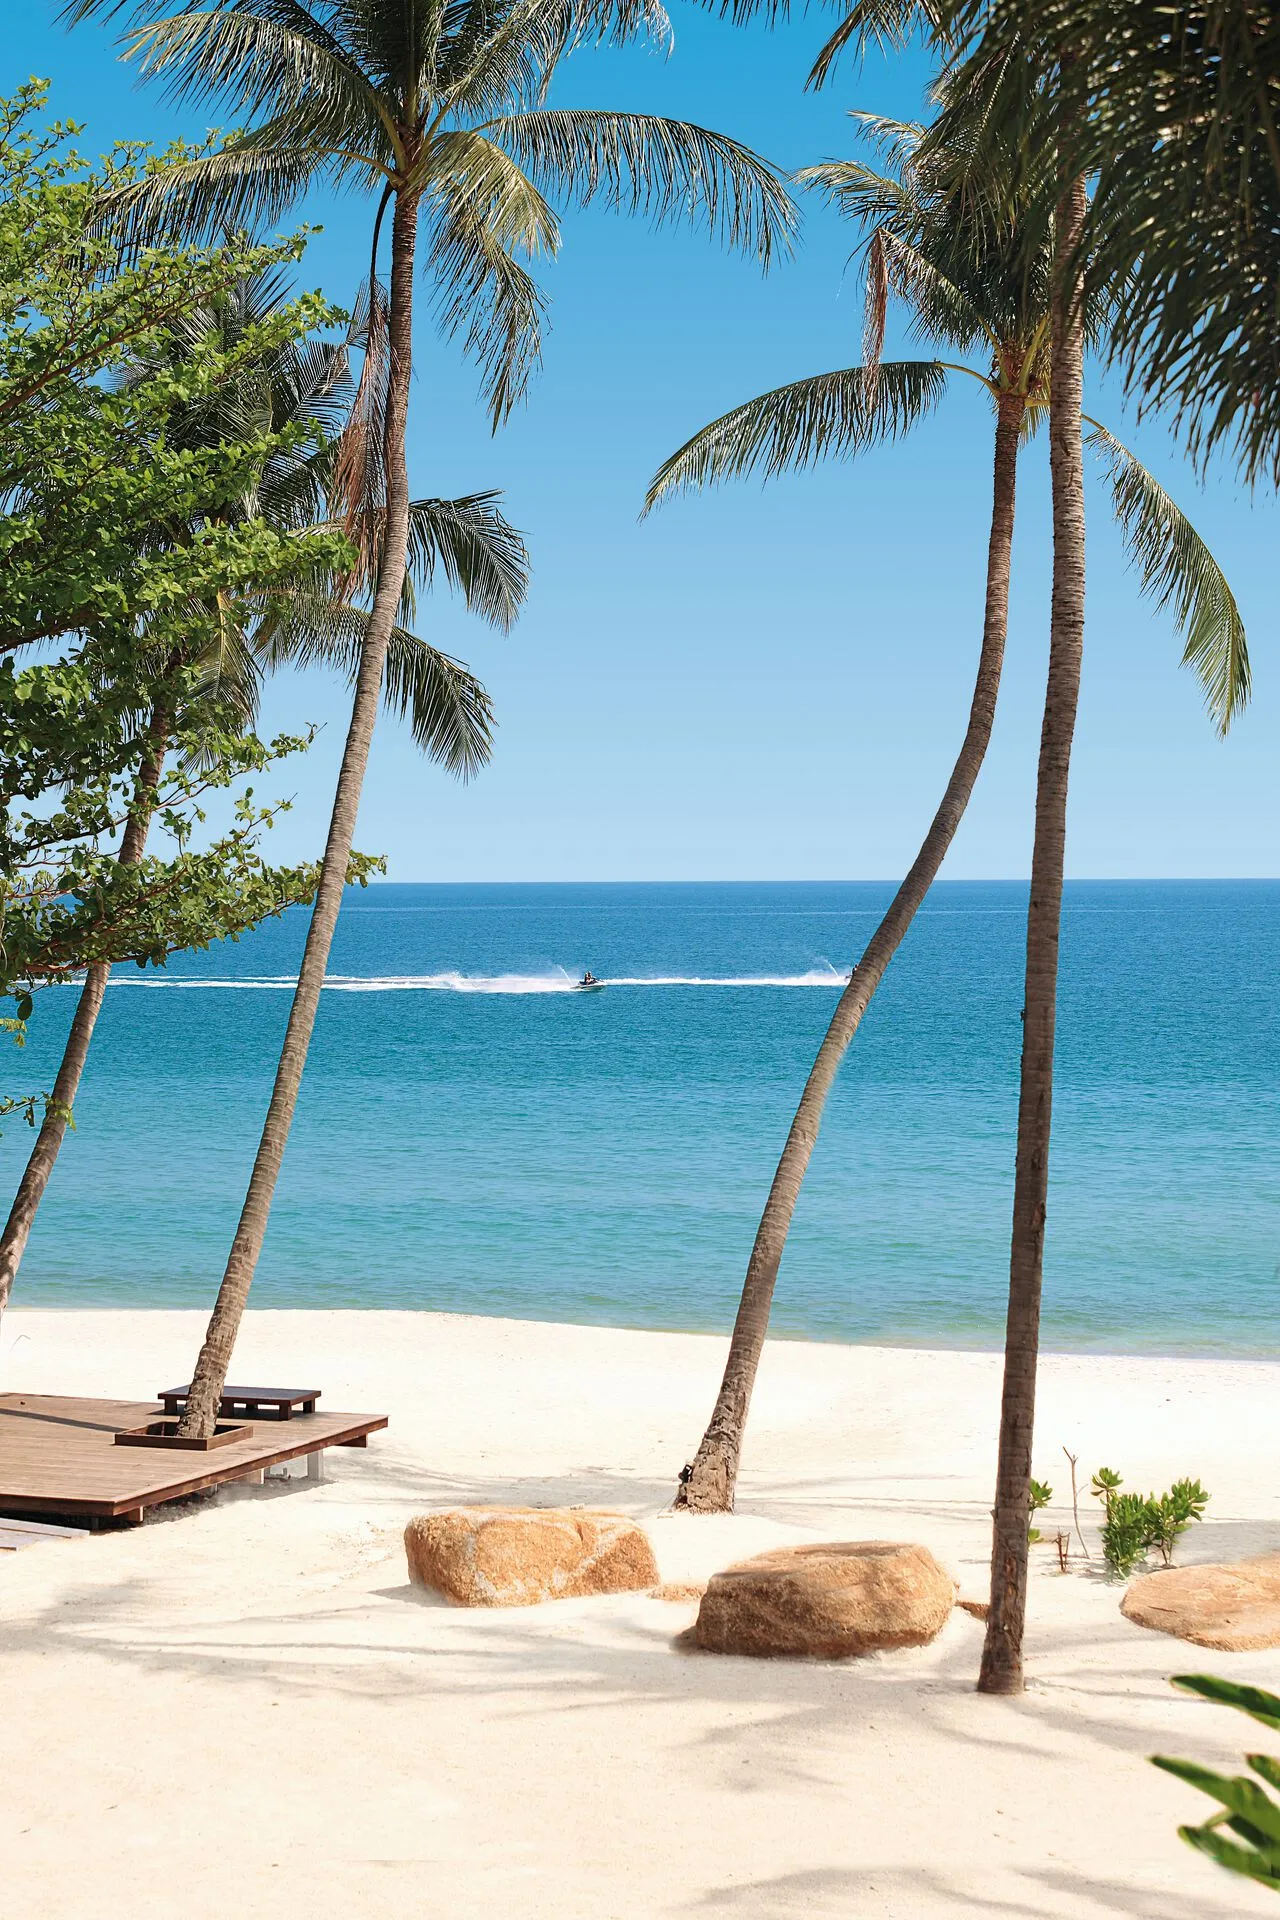 Thaïlande - Koh Samui - Hôtel New Star Beach Resort - transfert privé inclus 4*